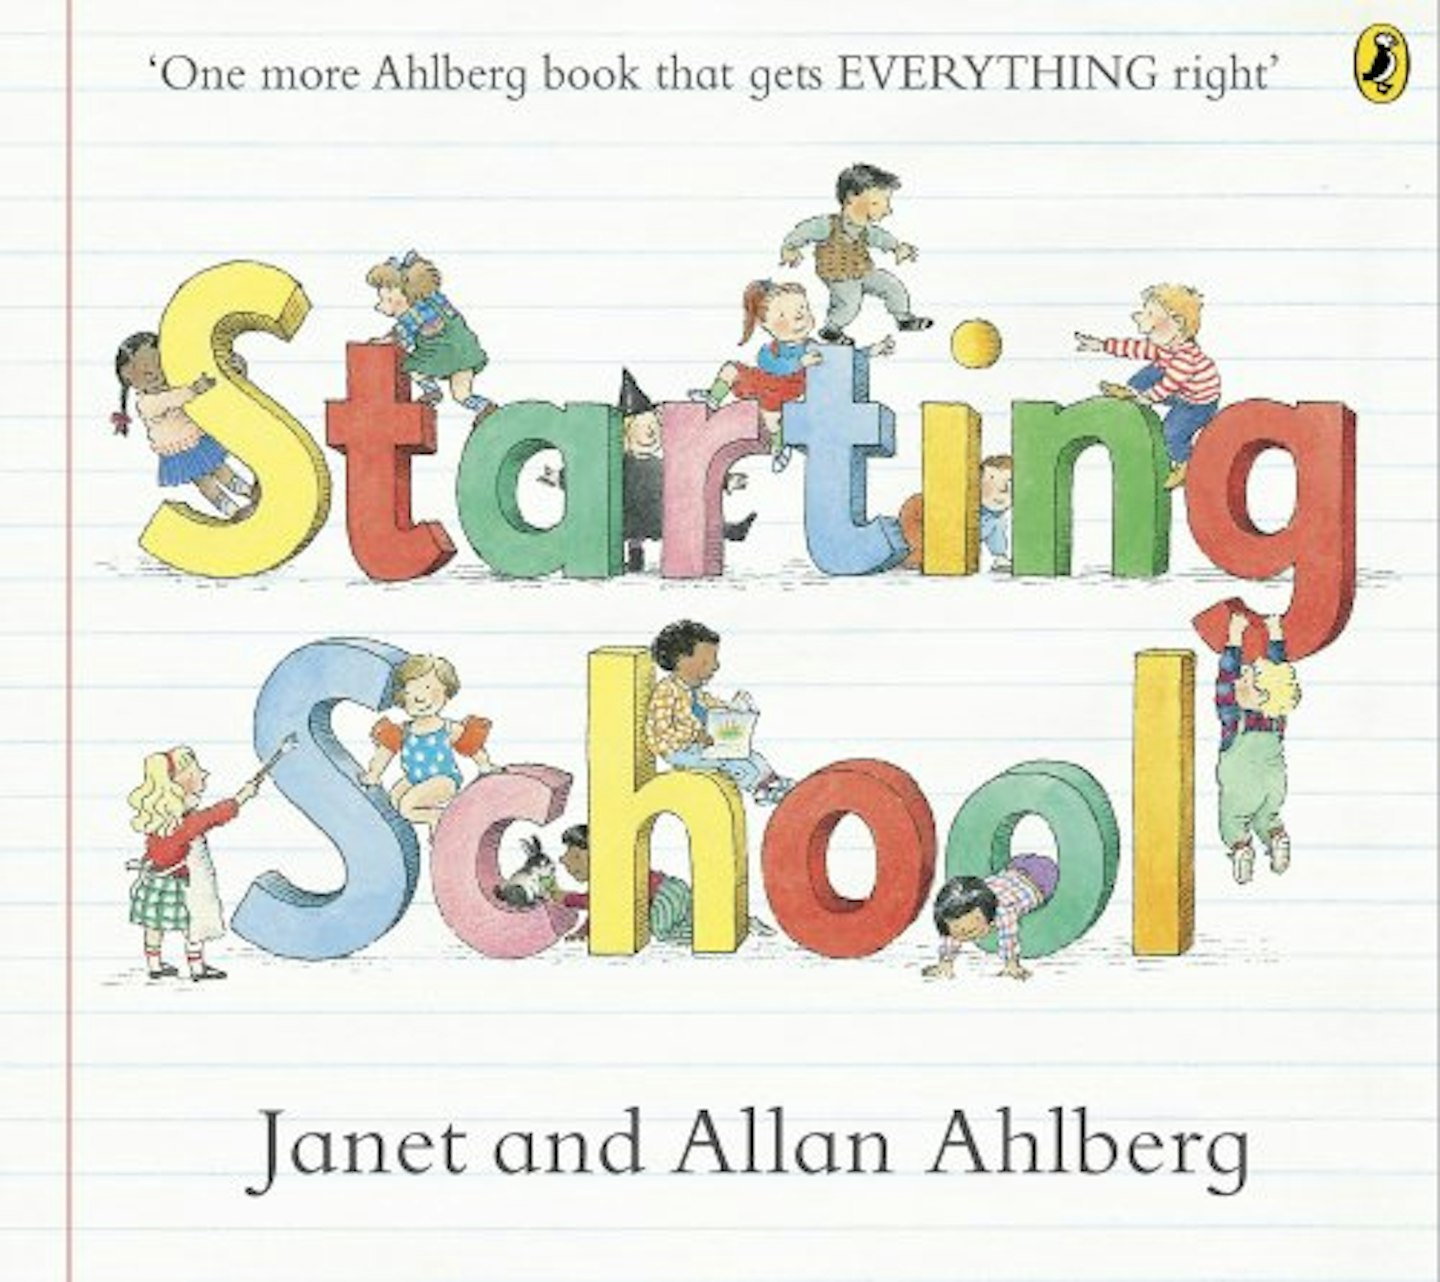 best book to prepare for nursery or school starting school